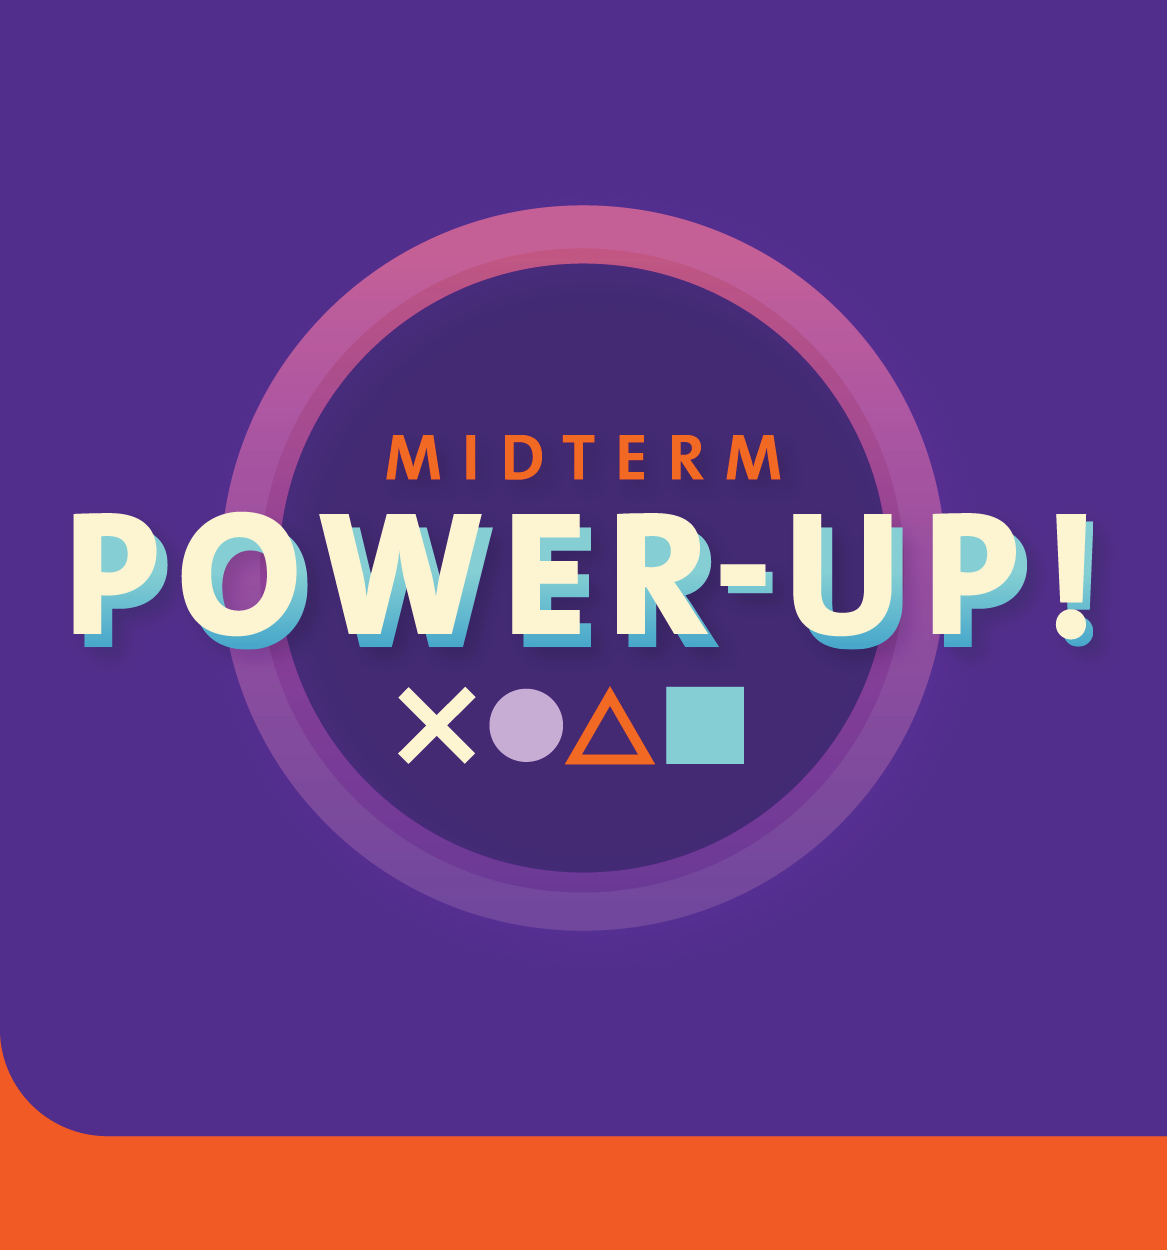 Midterm Power Up!